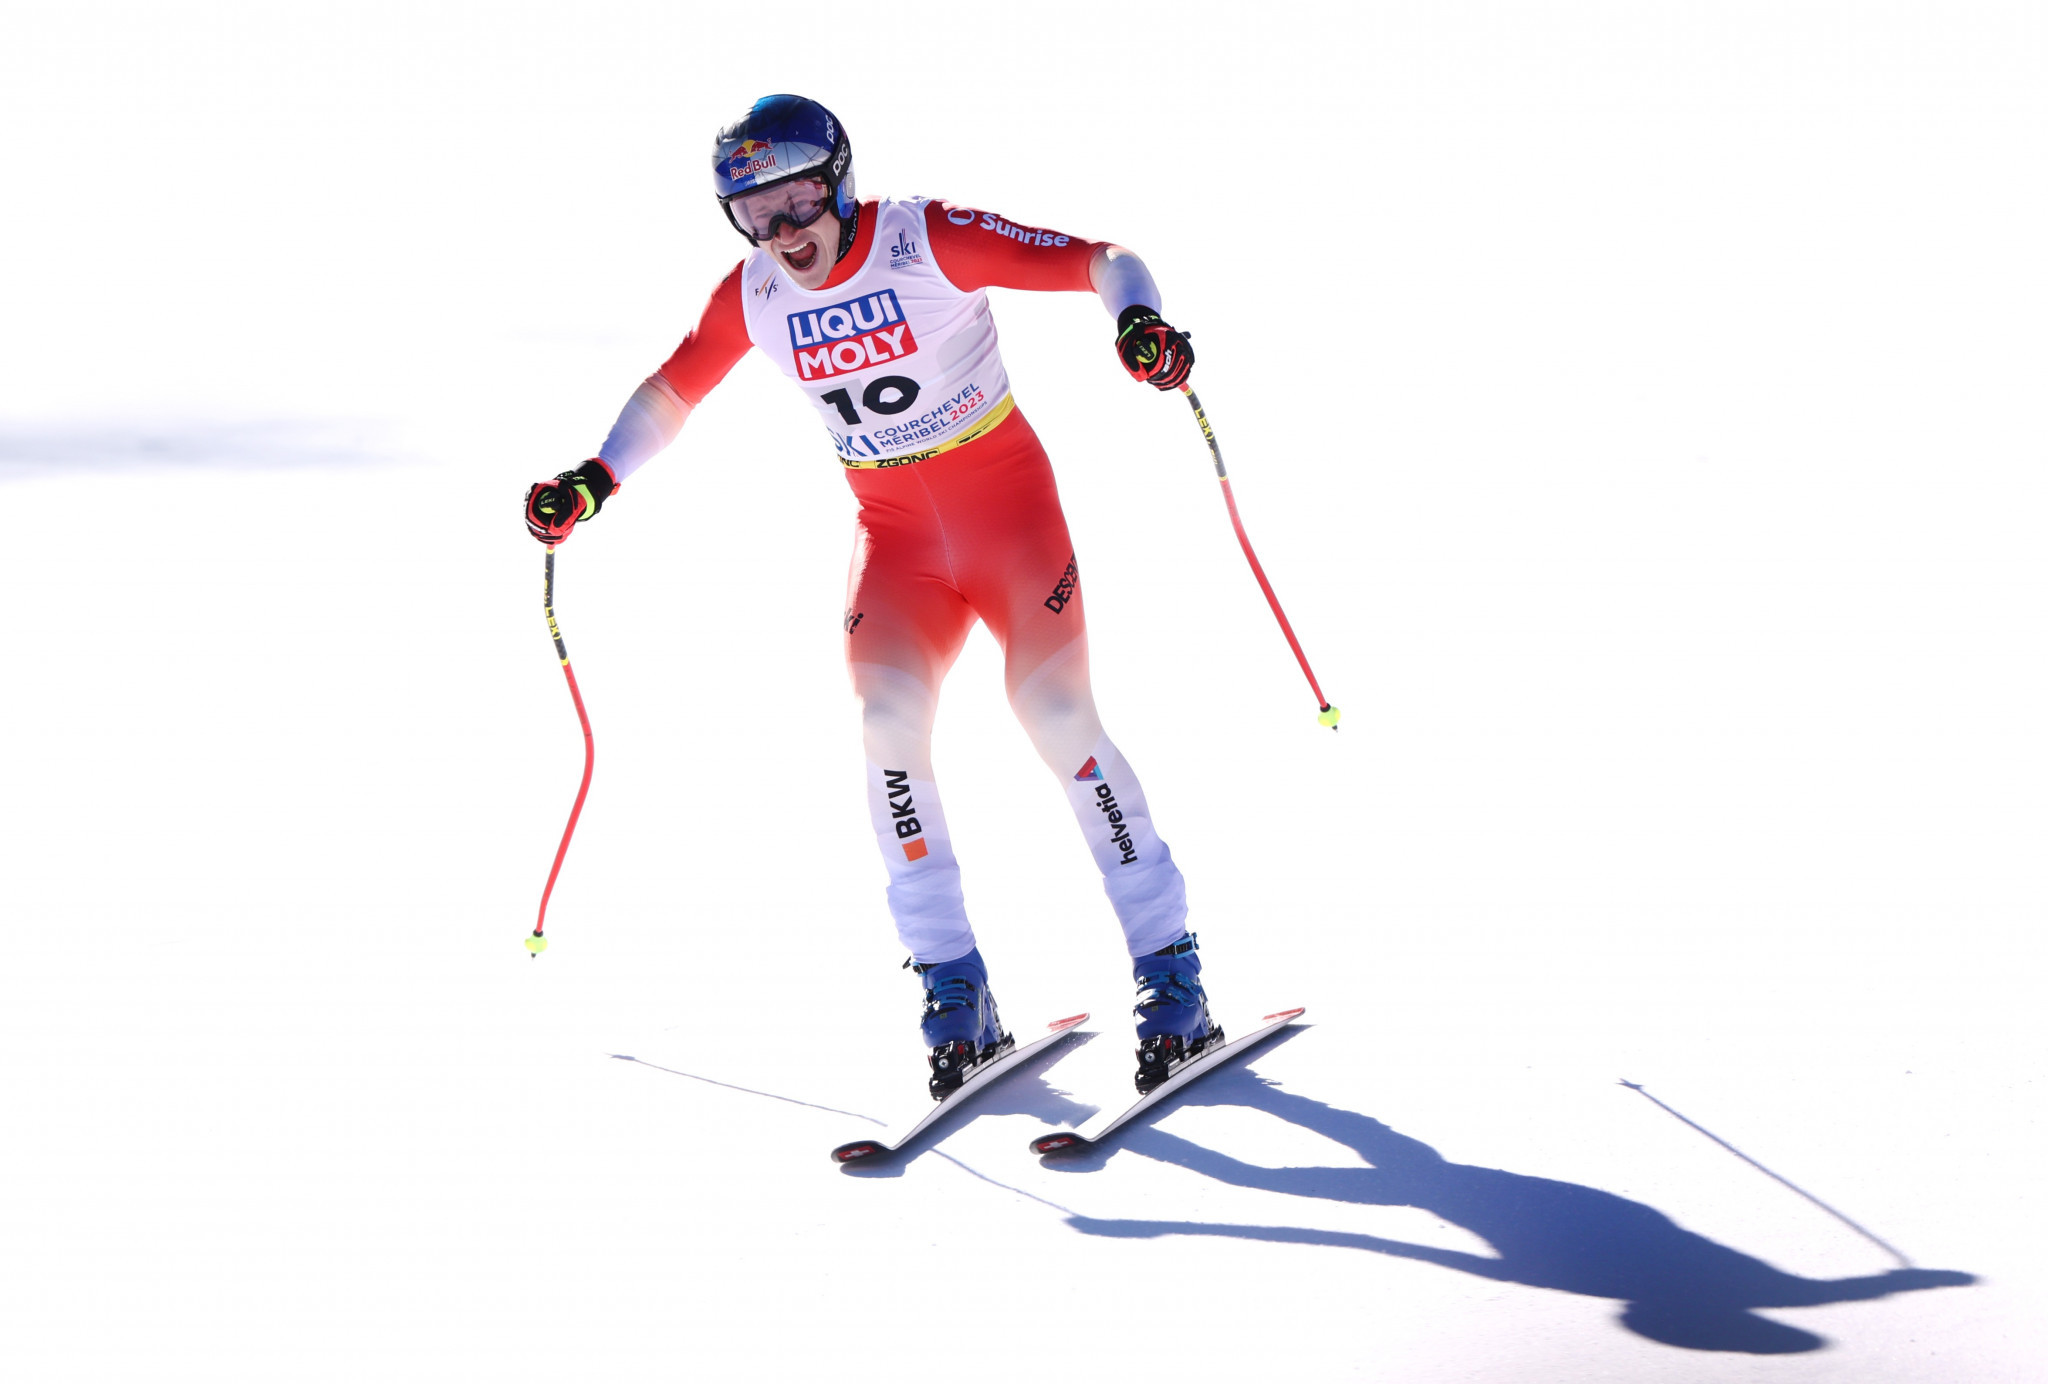 Switzerland's Odermatt wins giant slalom gold at Alpine Ski World Cup in Slovenia